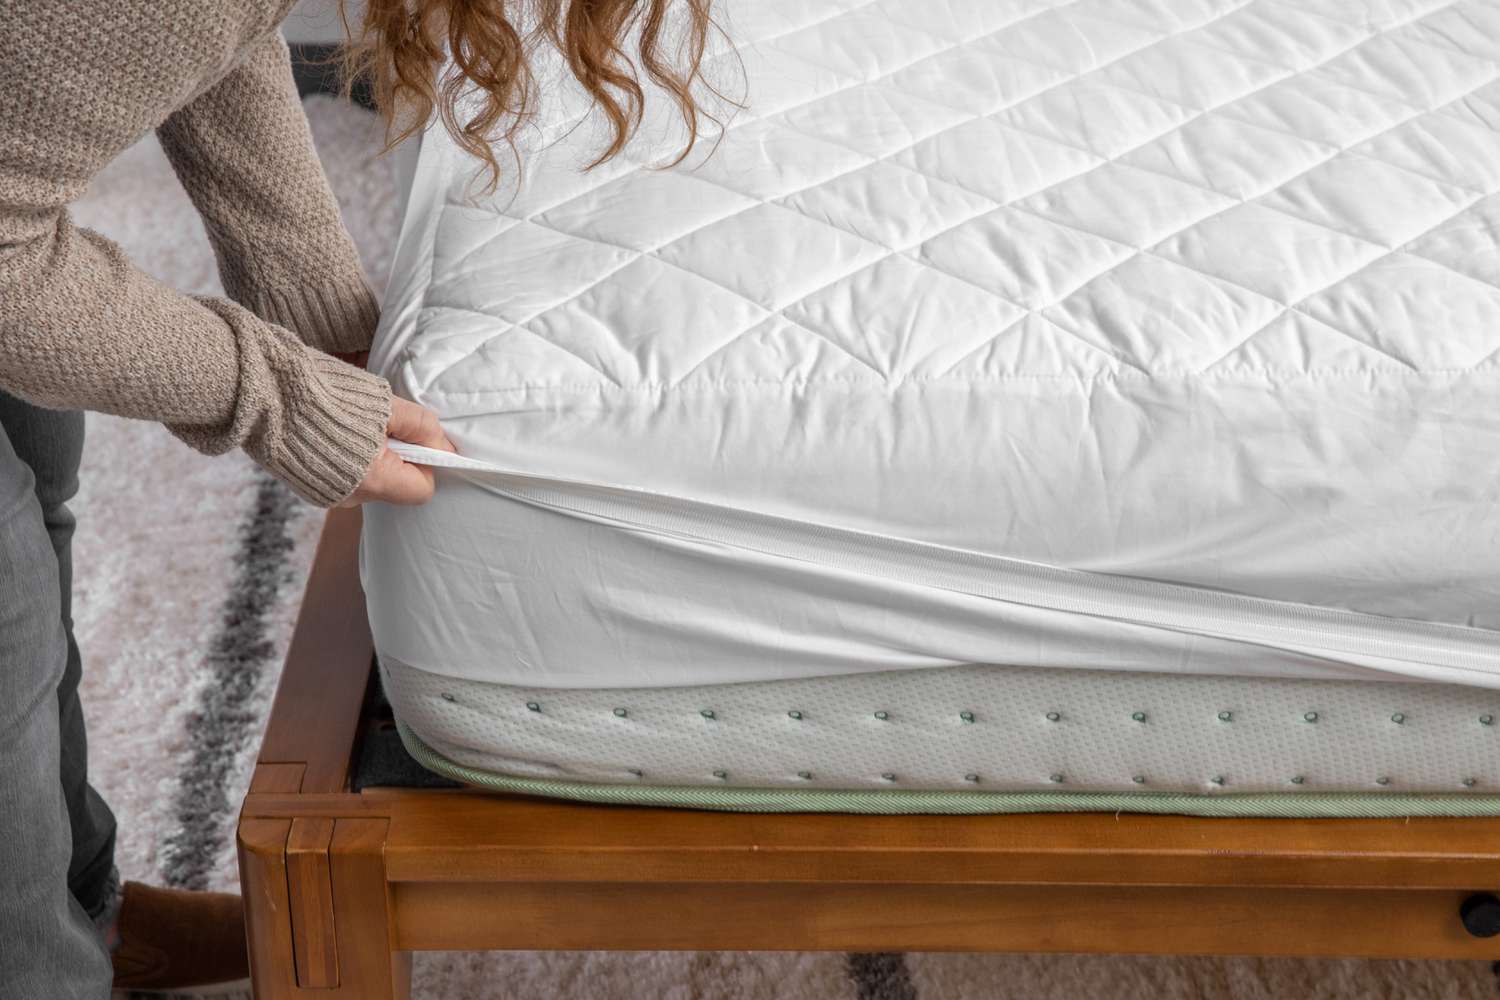 Premium Incontinence Washable Bed Pad - Heavy Duty Reusable Cotton